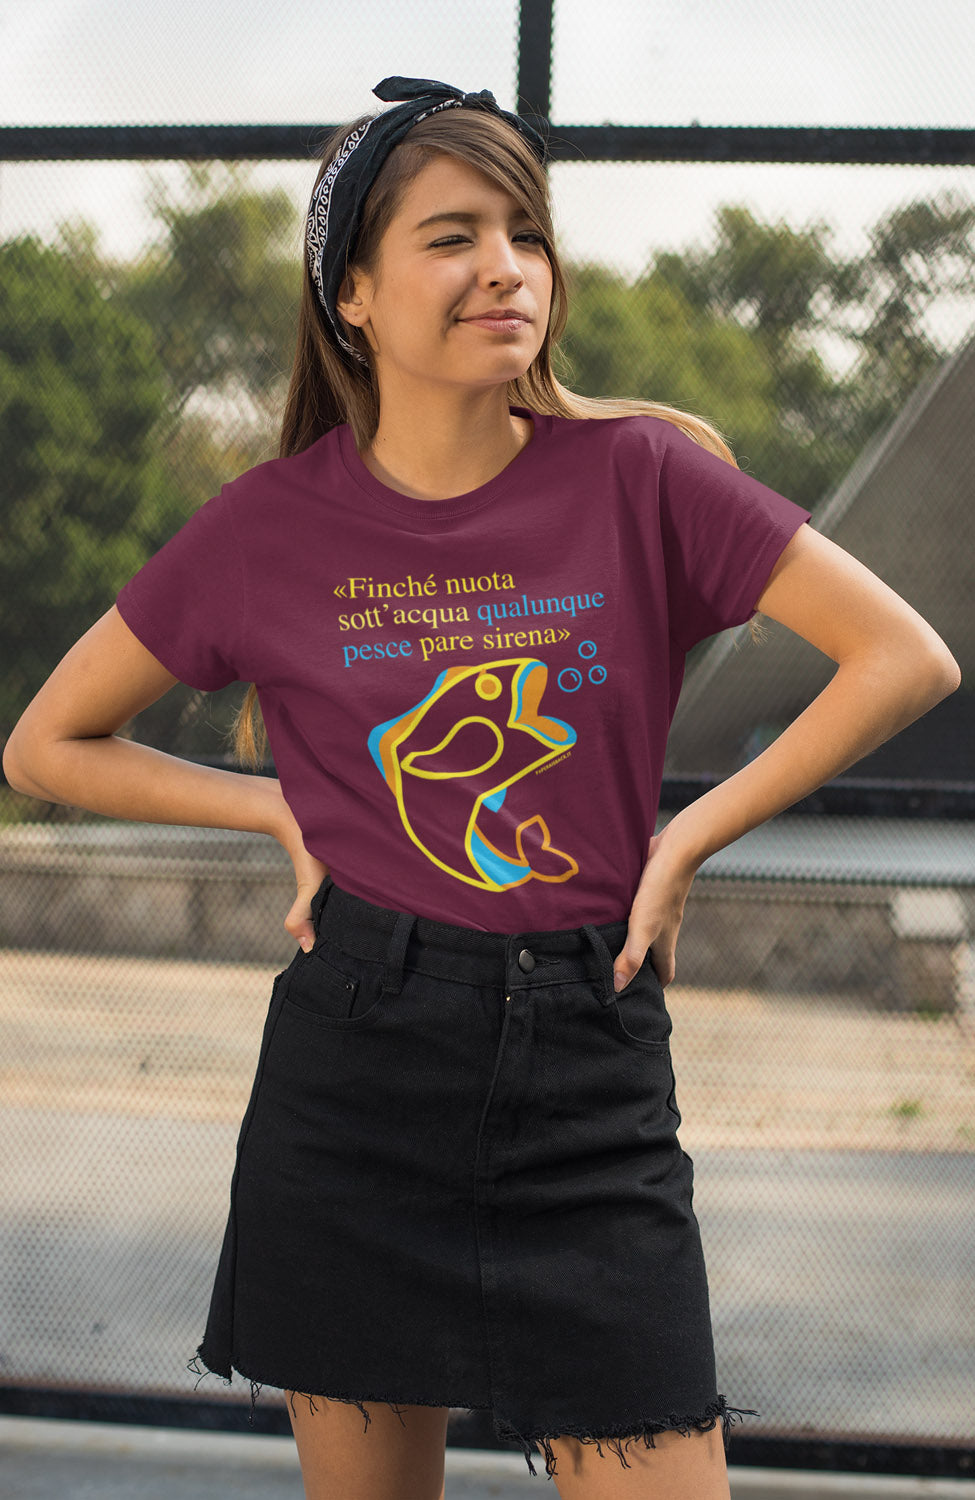 T-Shirt Pesce Sirena